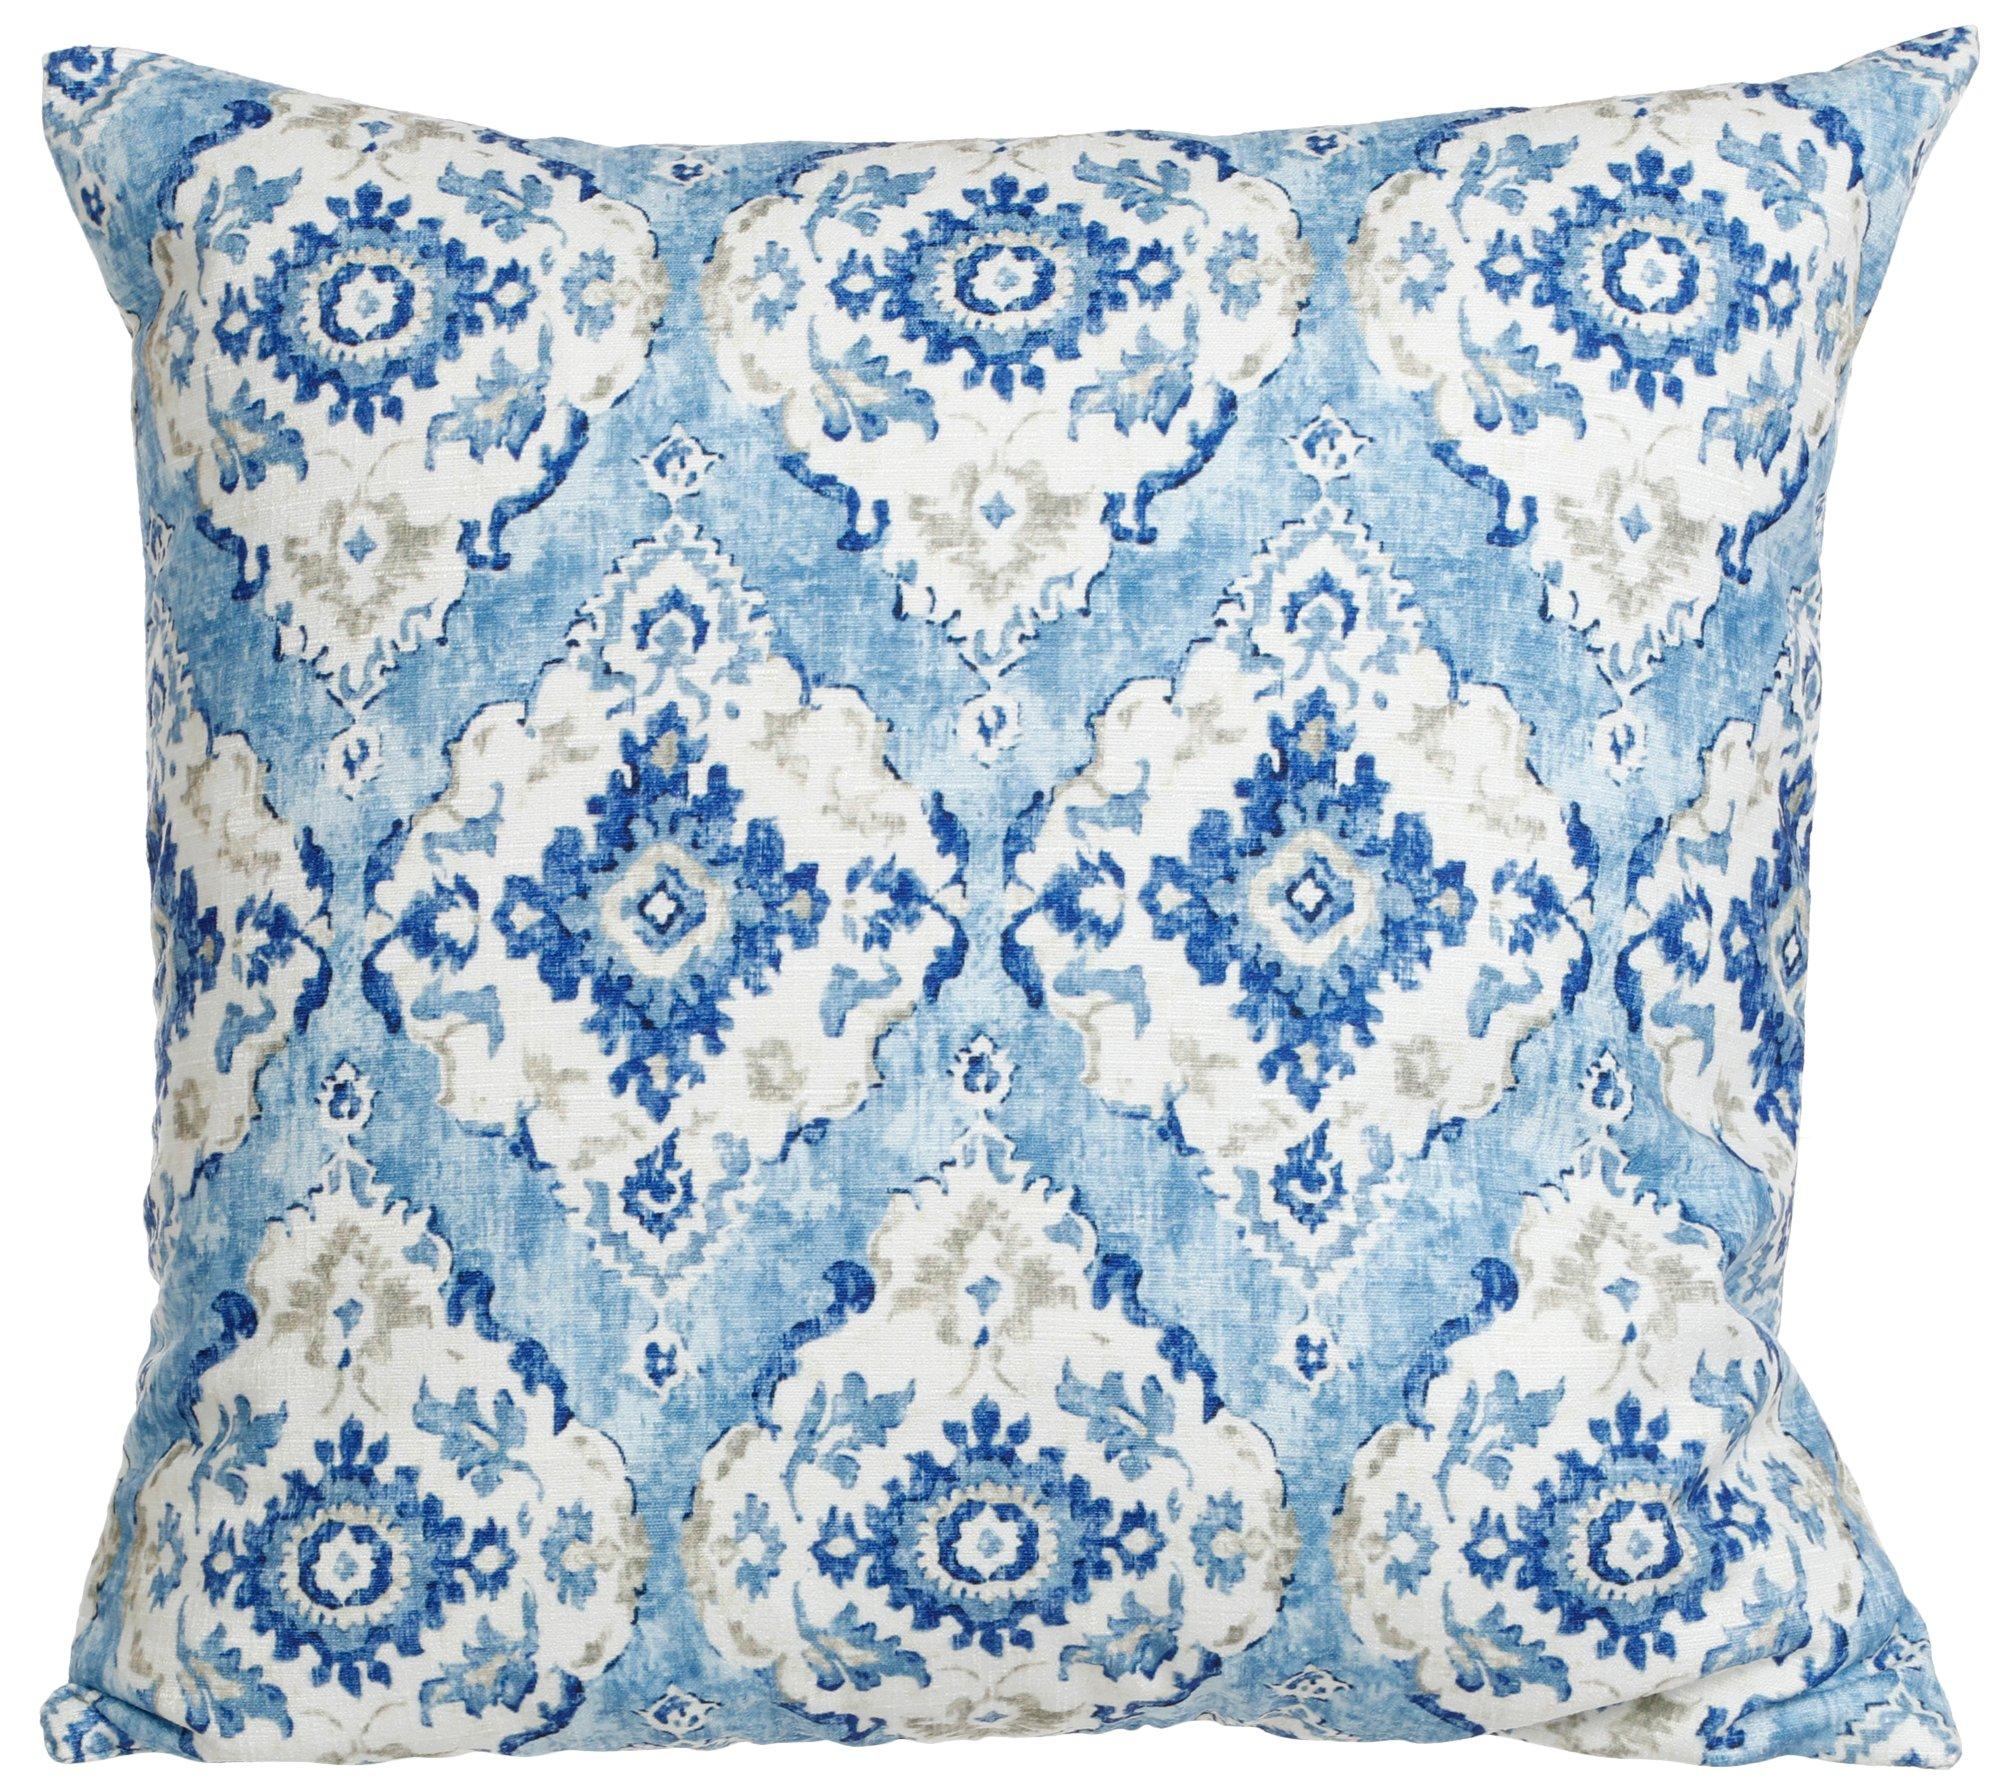 19x19 Decorative Pillow